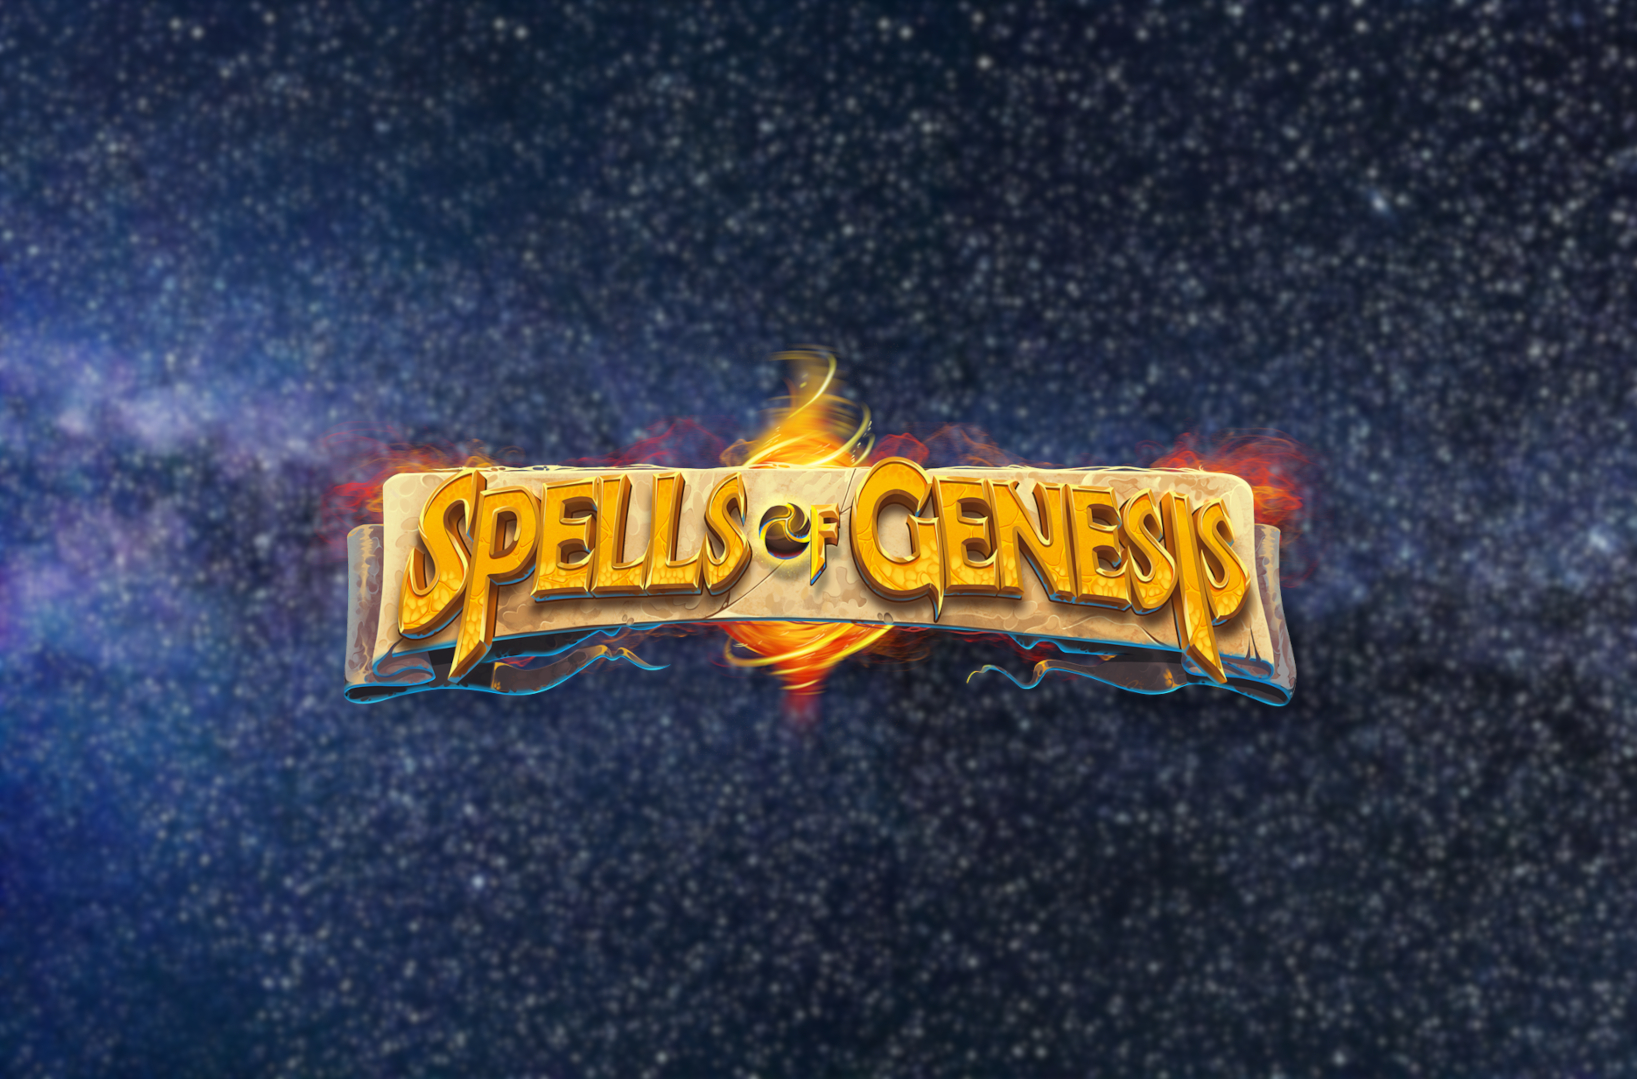 Spells of Genesis blockchain game